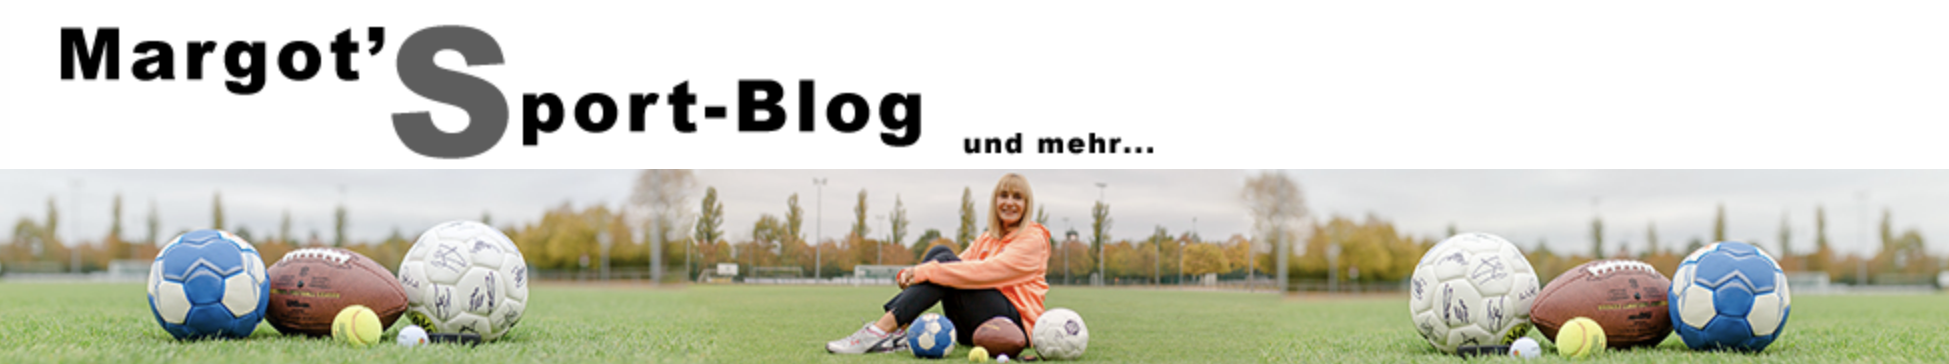 Margot's Sport-Blog